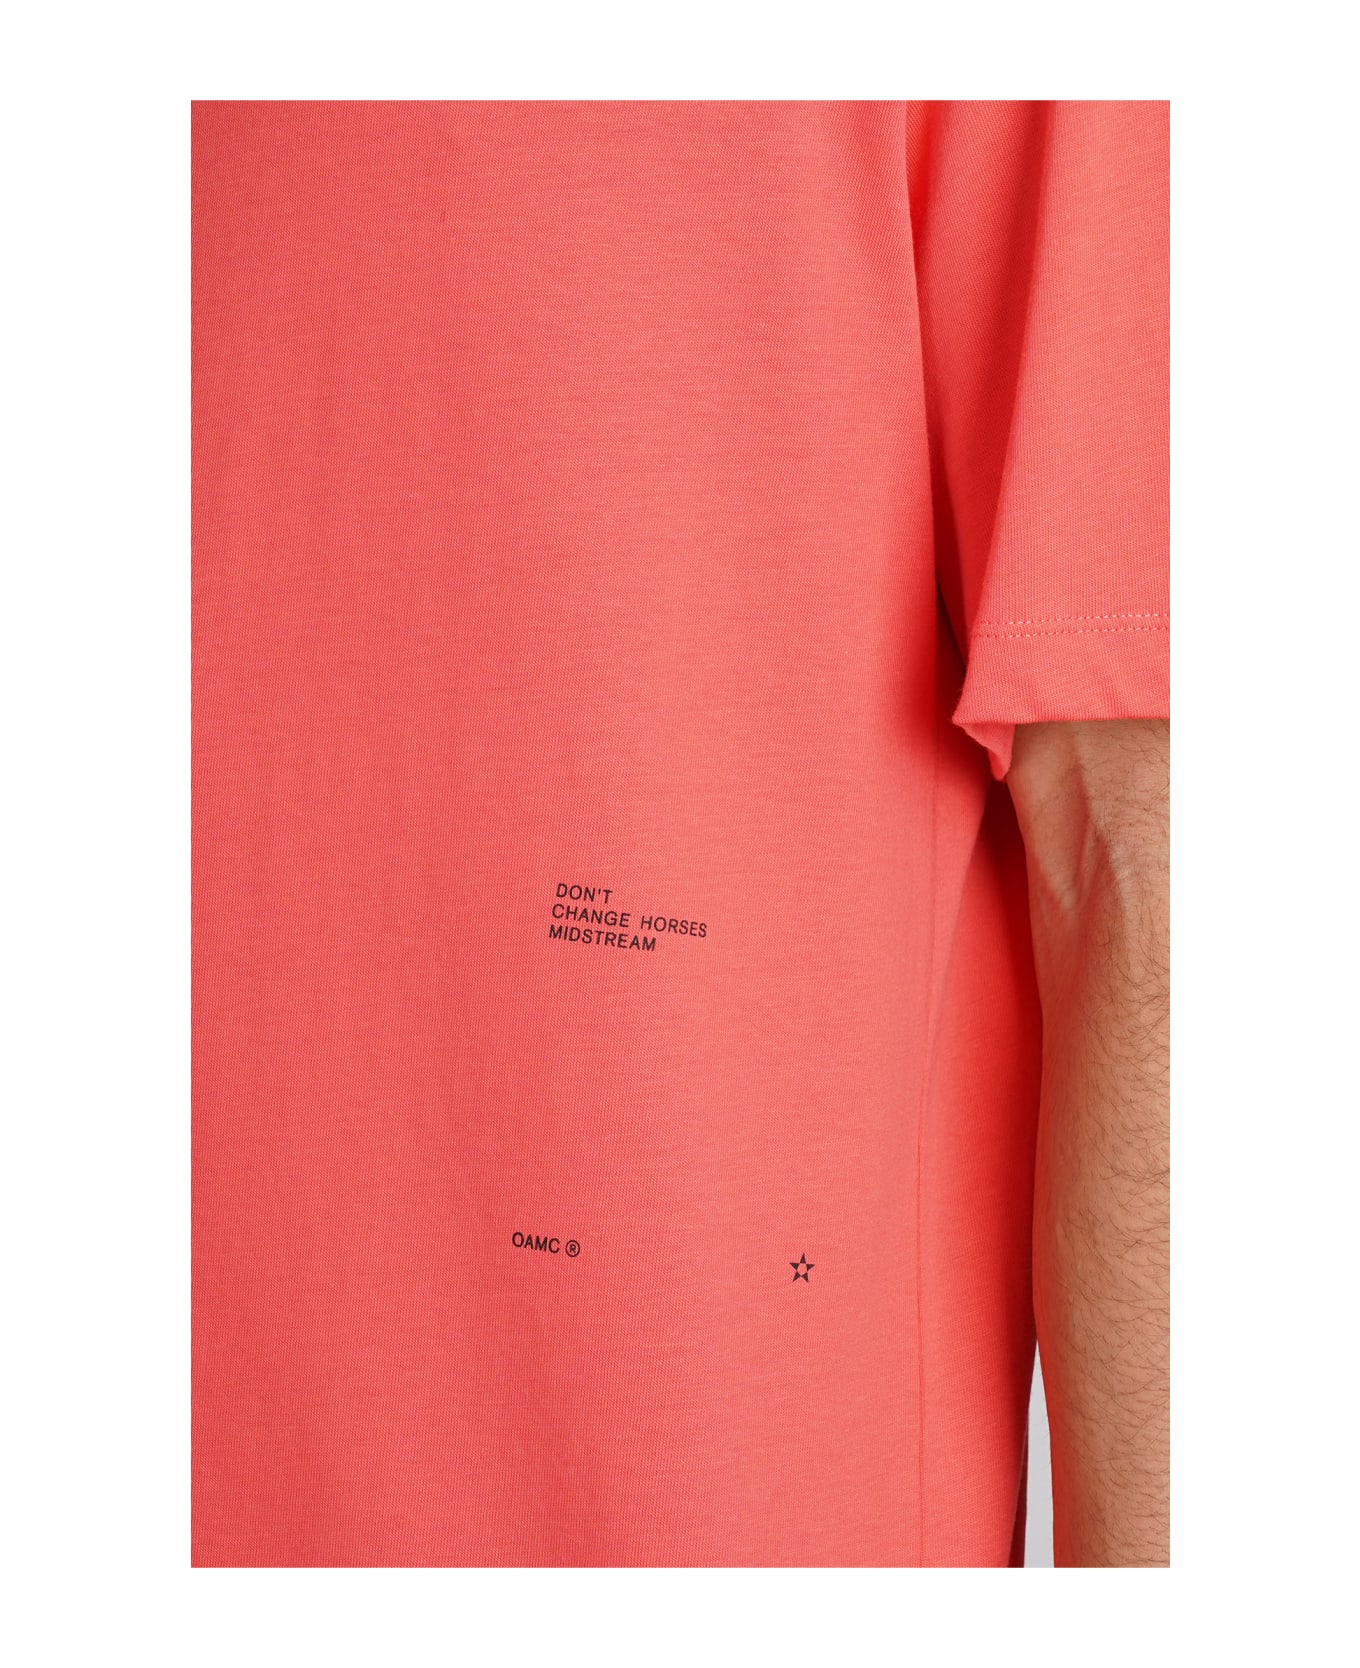 OAMC T-shirt In Orange Cotton - orange シャツ